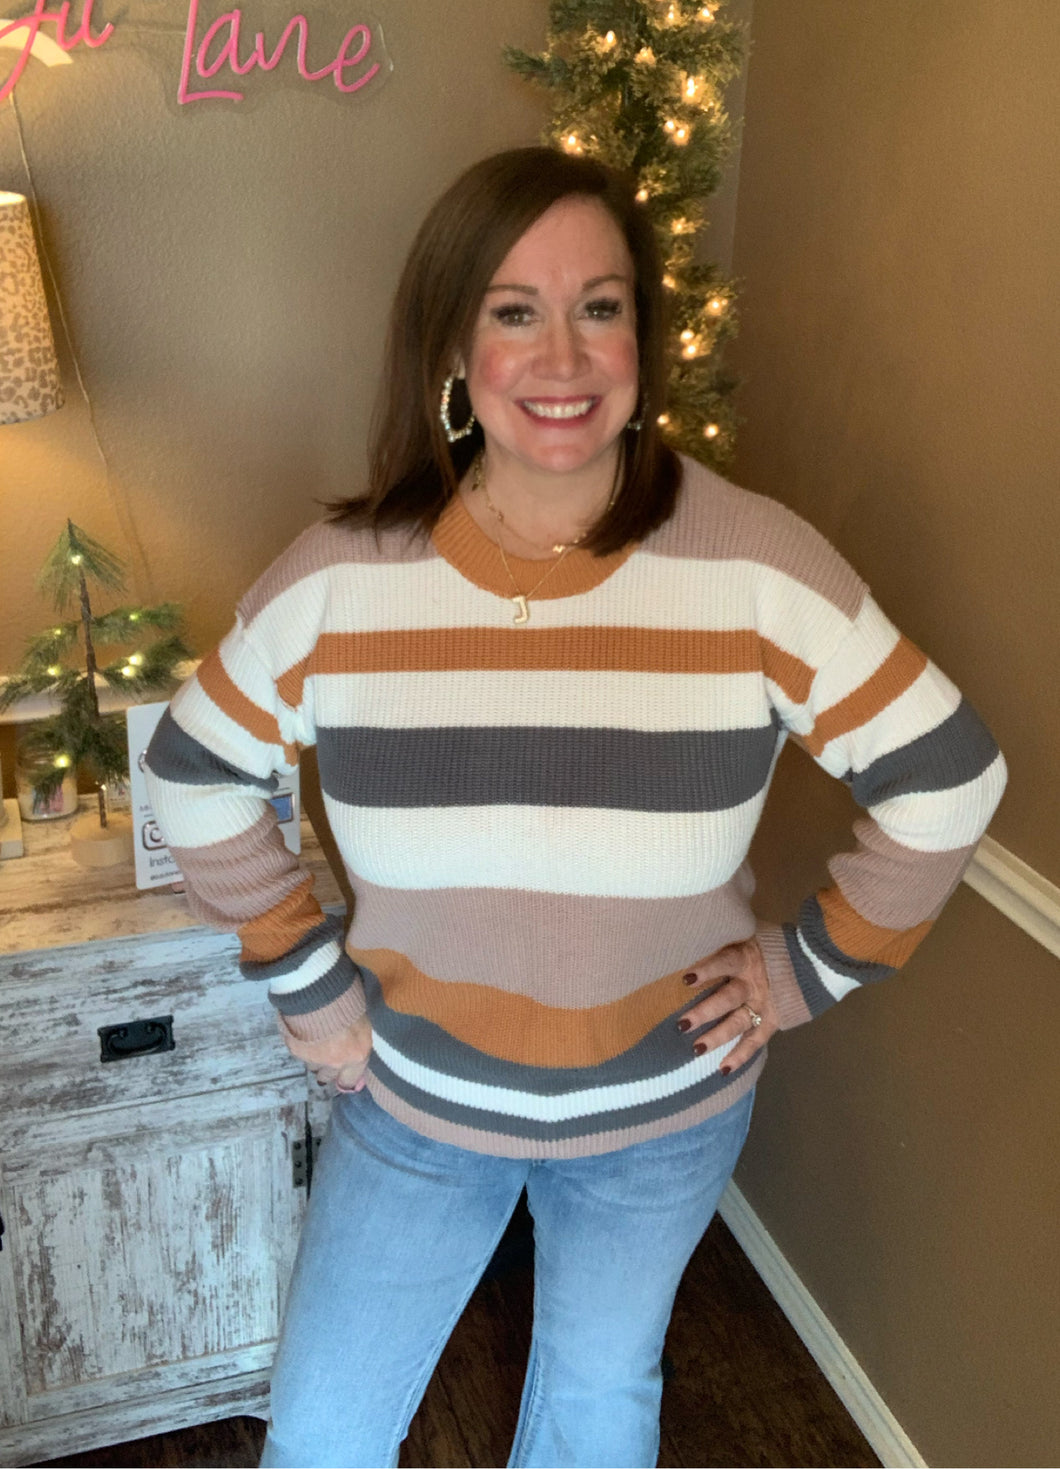 Striped Color Block Sweater